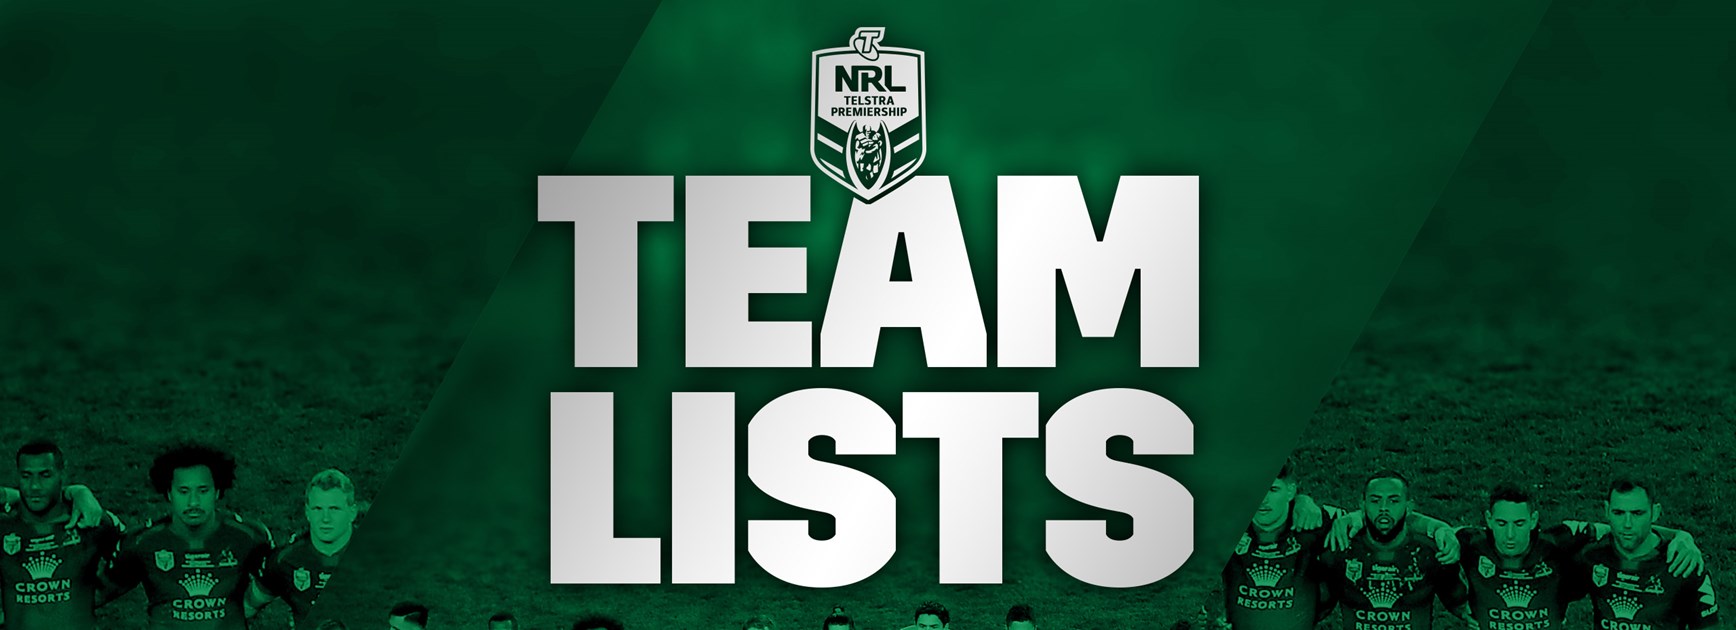 Round 5 NRL team lists